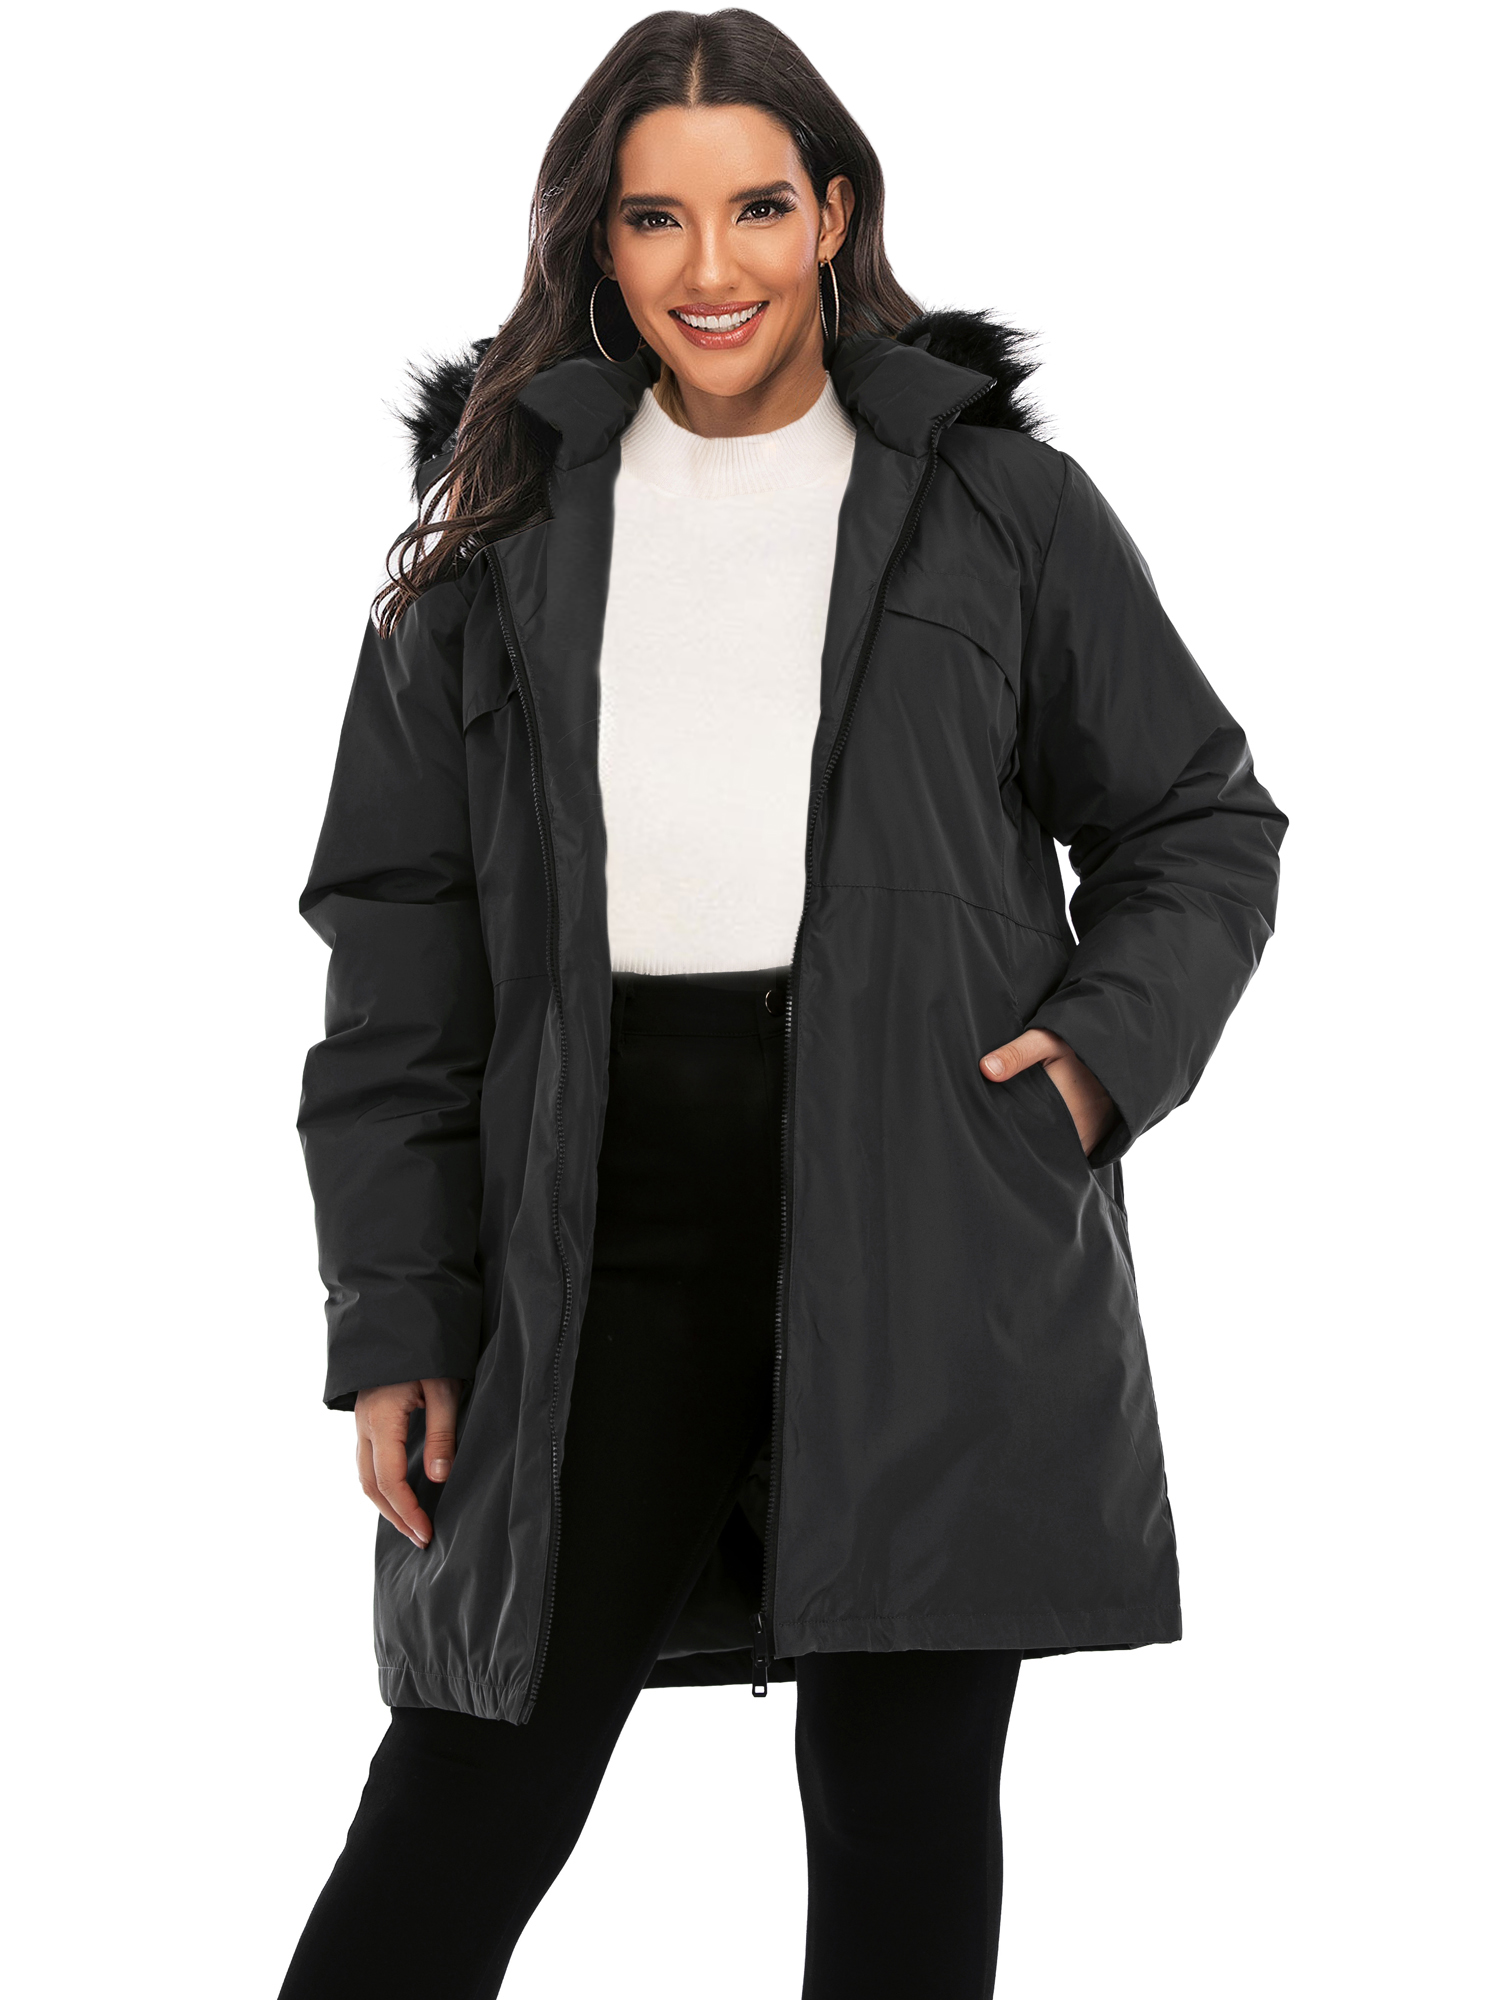 LELINTA Women Plus Size Winter Coats Hooded Warm Puffer Lined Jacket Zip Parka Raincoat Active Outdoor Trench Long Coats - image 3 of 7